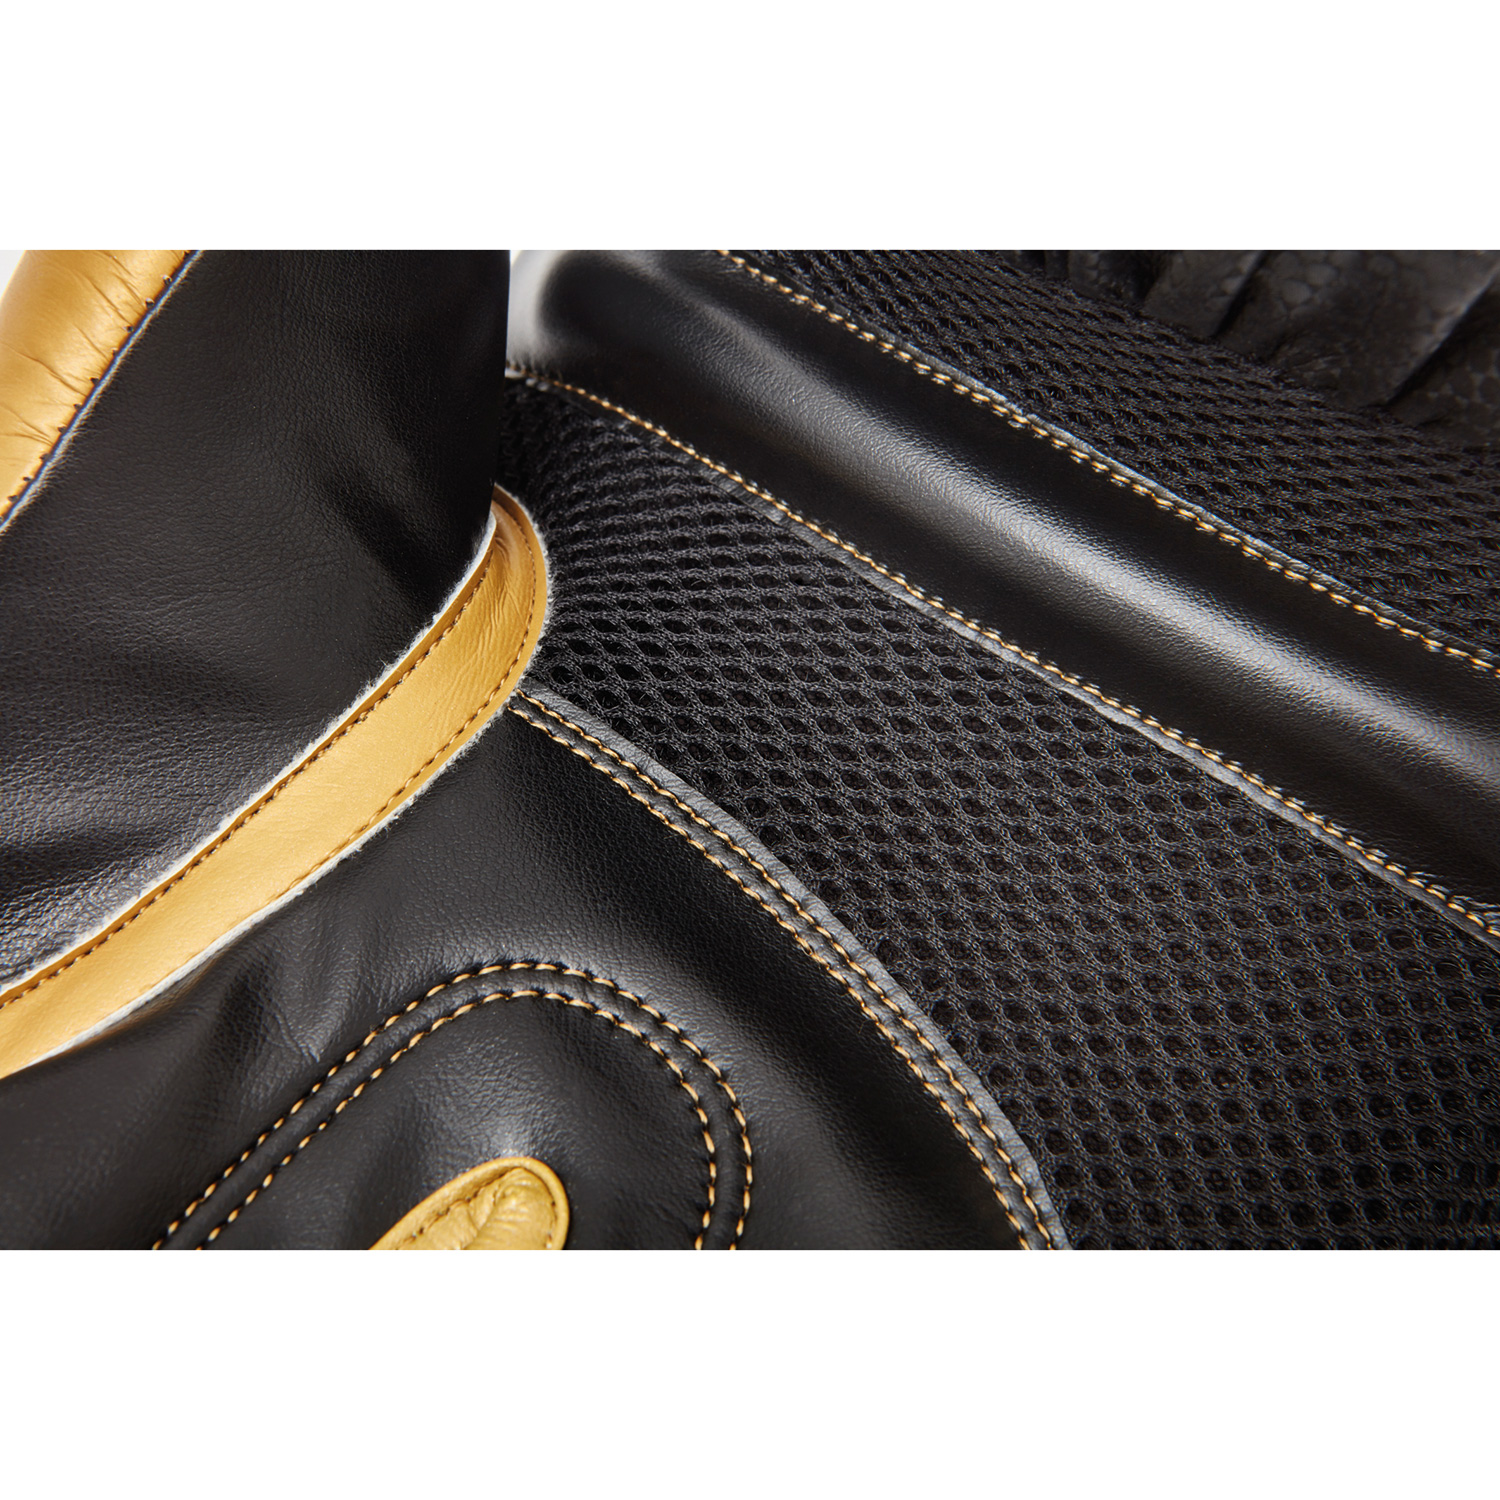 Reebok boxing gloves gold/black 10 oz